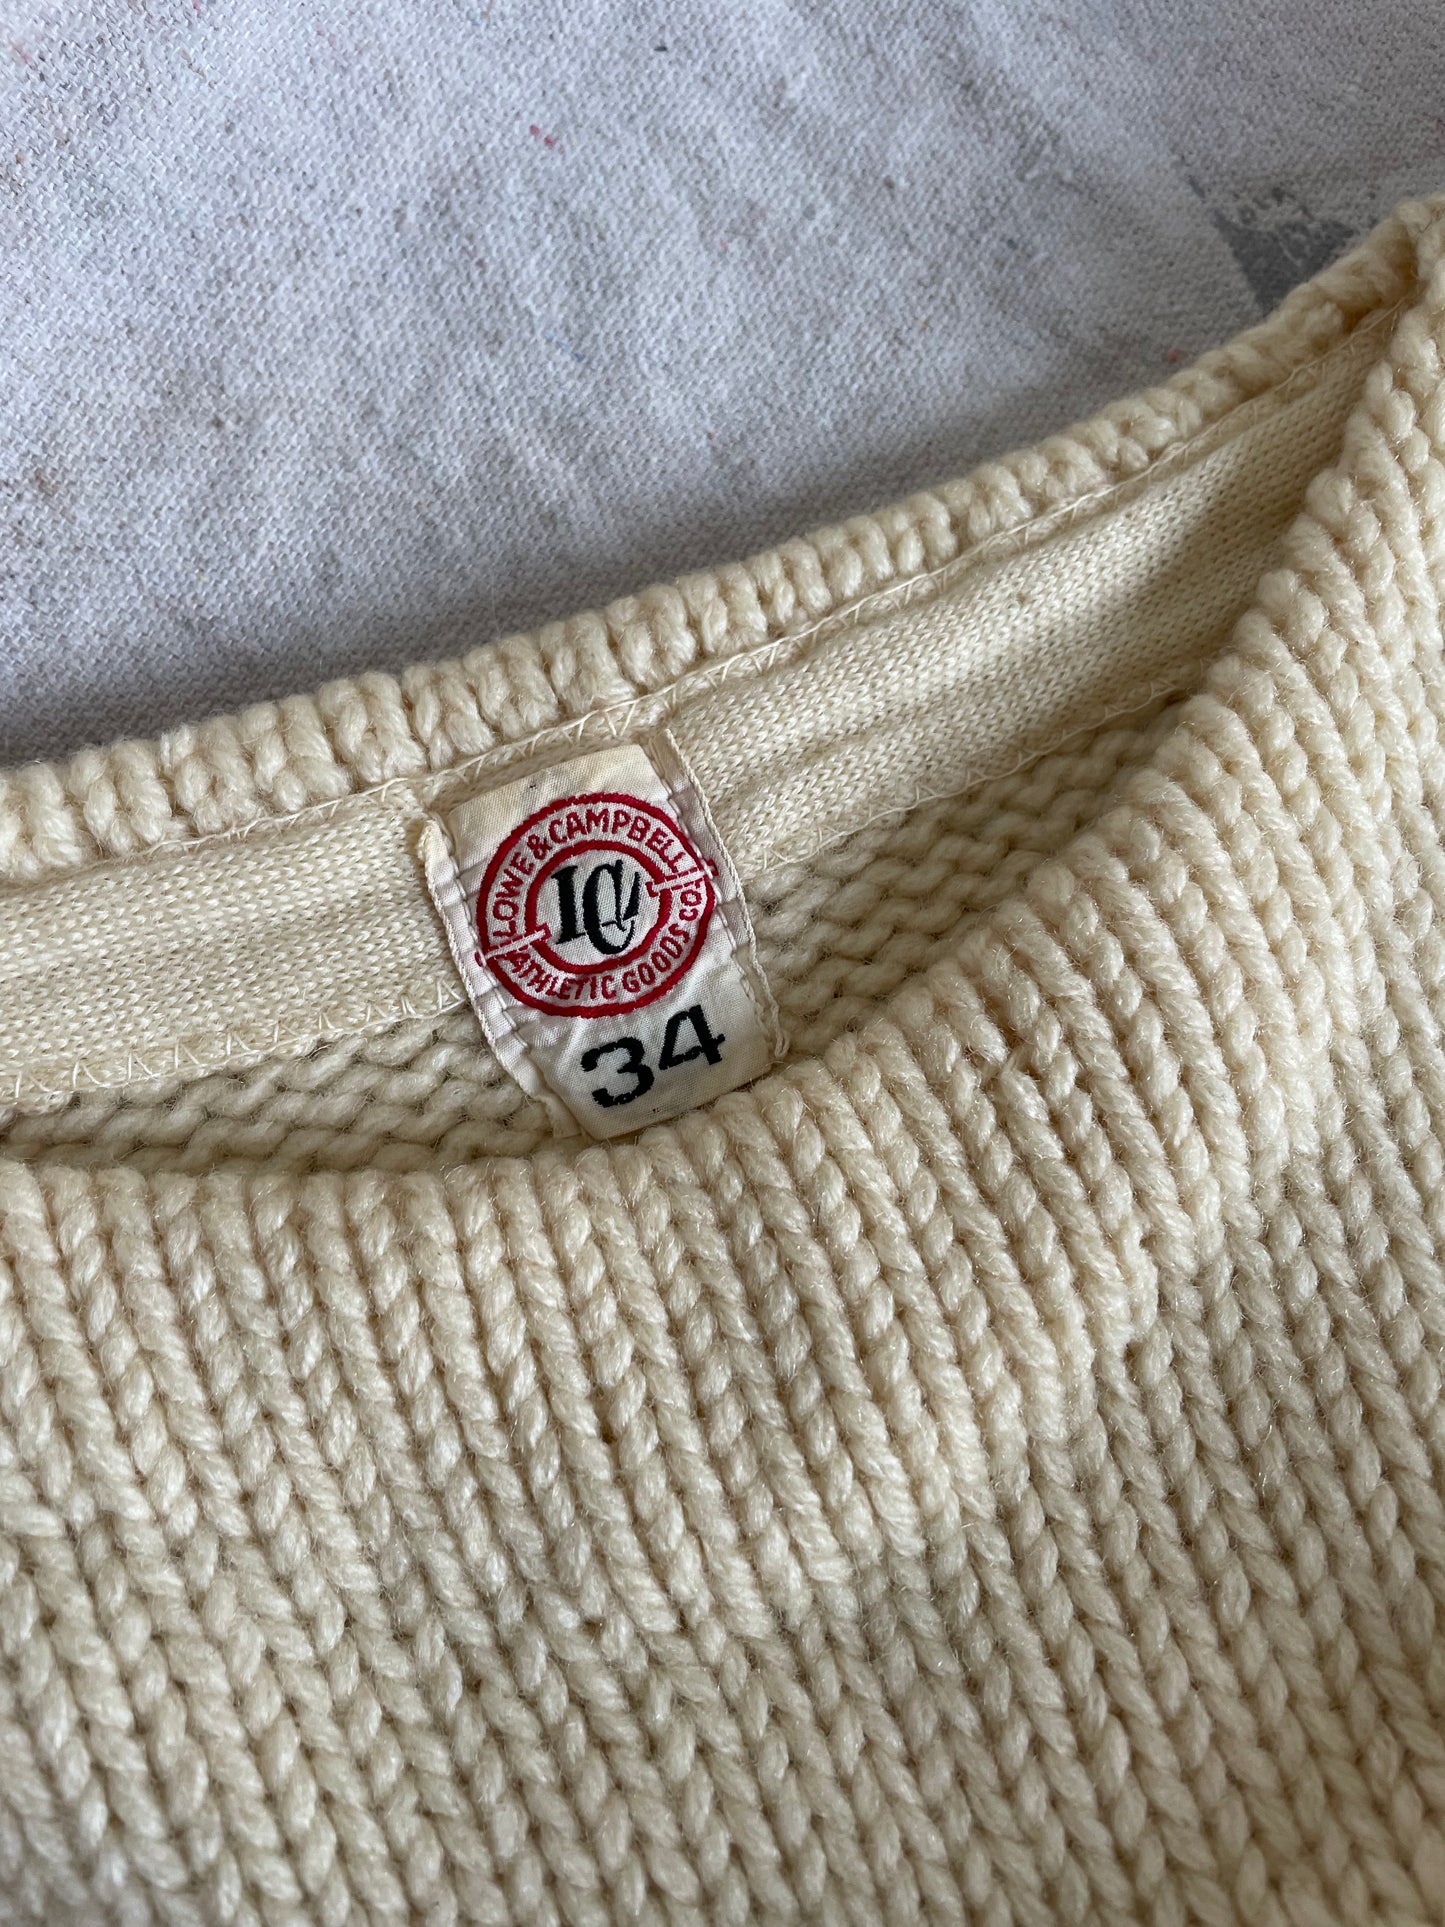 30s/40s Ecru Pullover Varsity Sweater